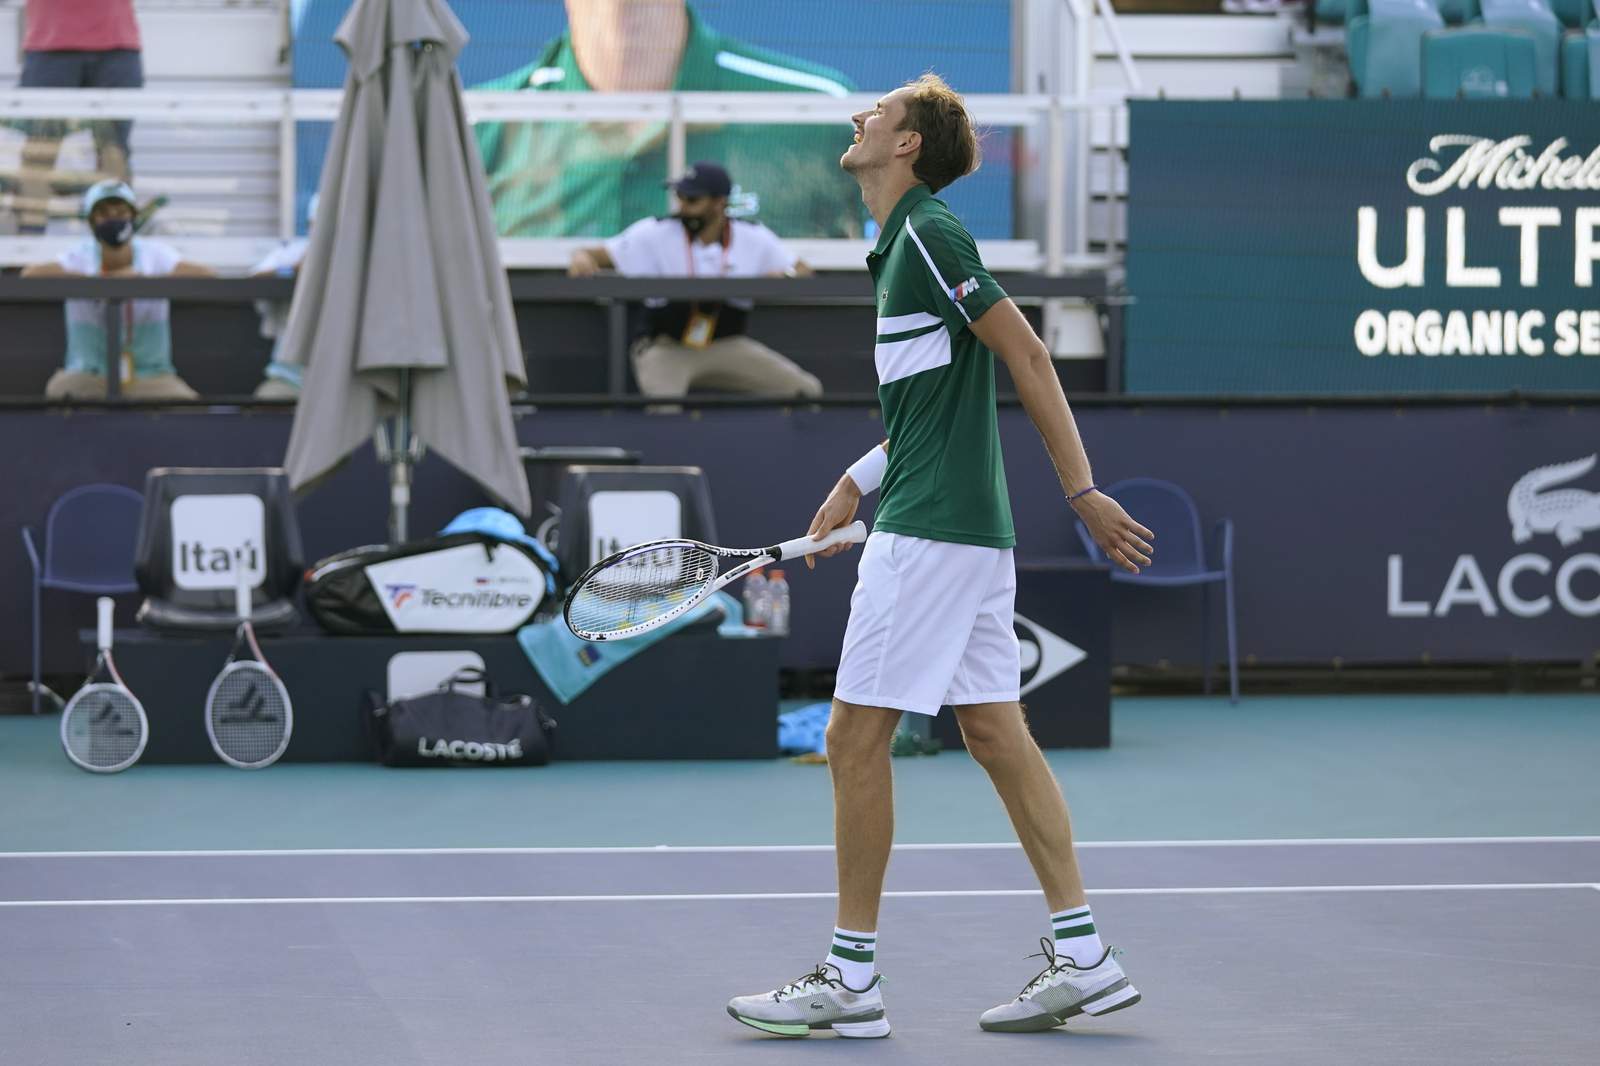 Tennis: Tennis-Medvedev rolls past Hanfmann to reach Rome semi-finals